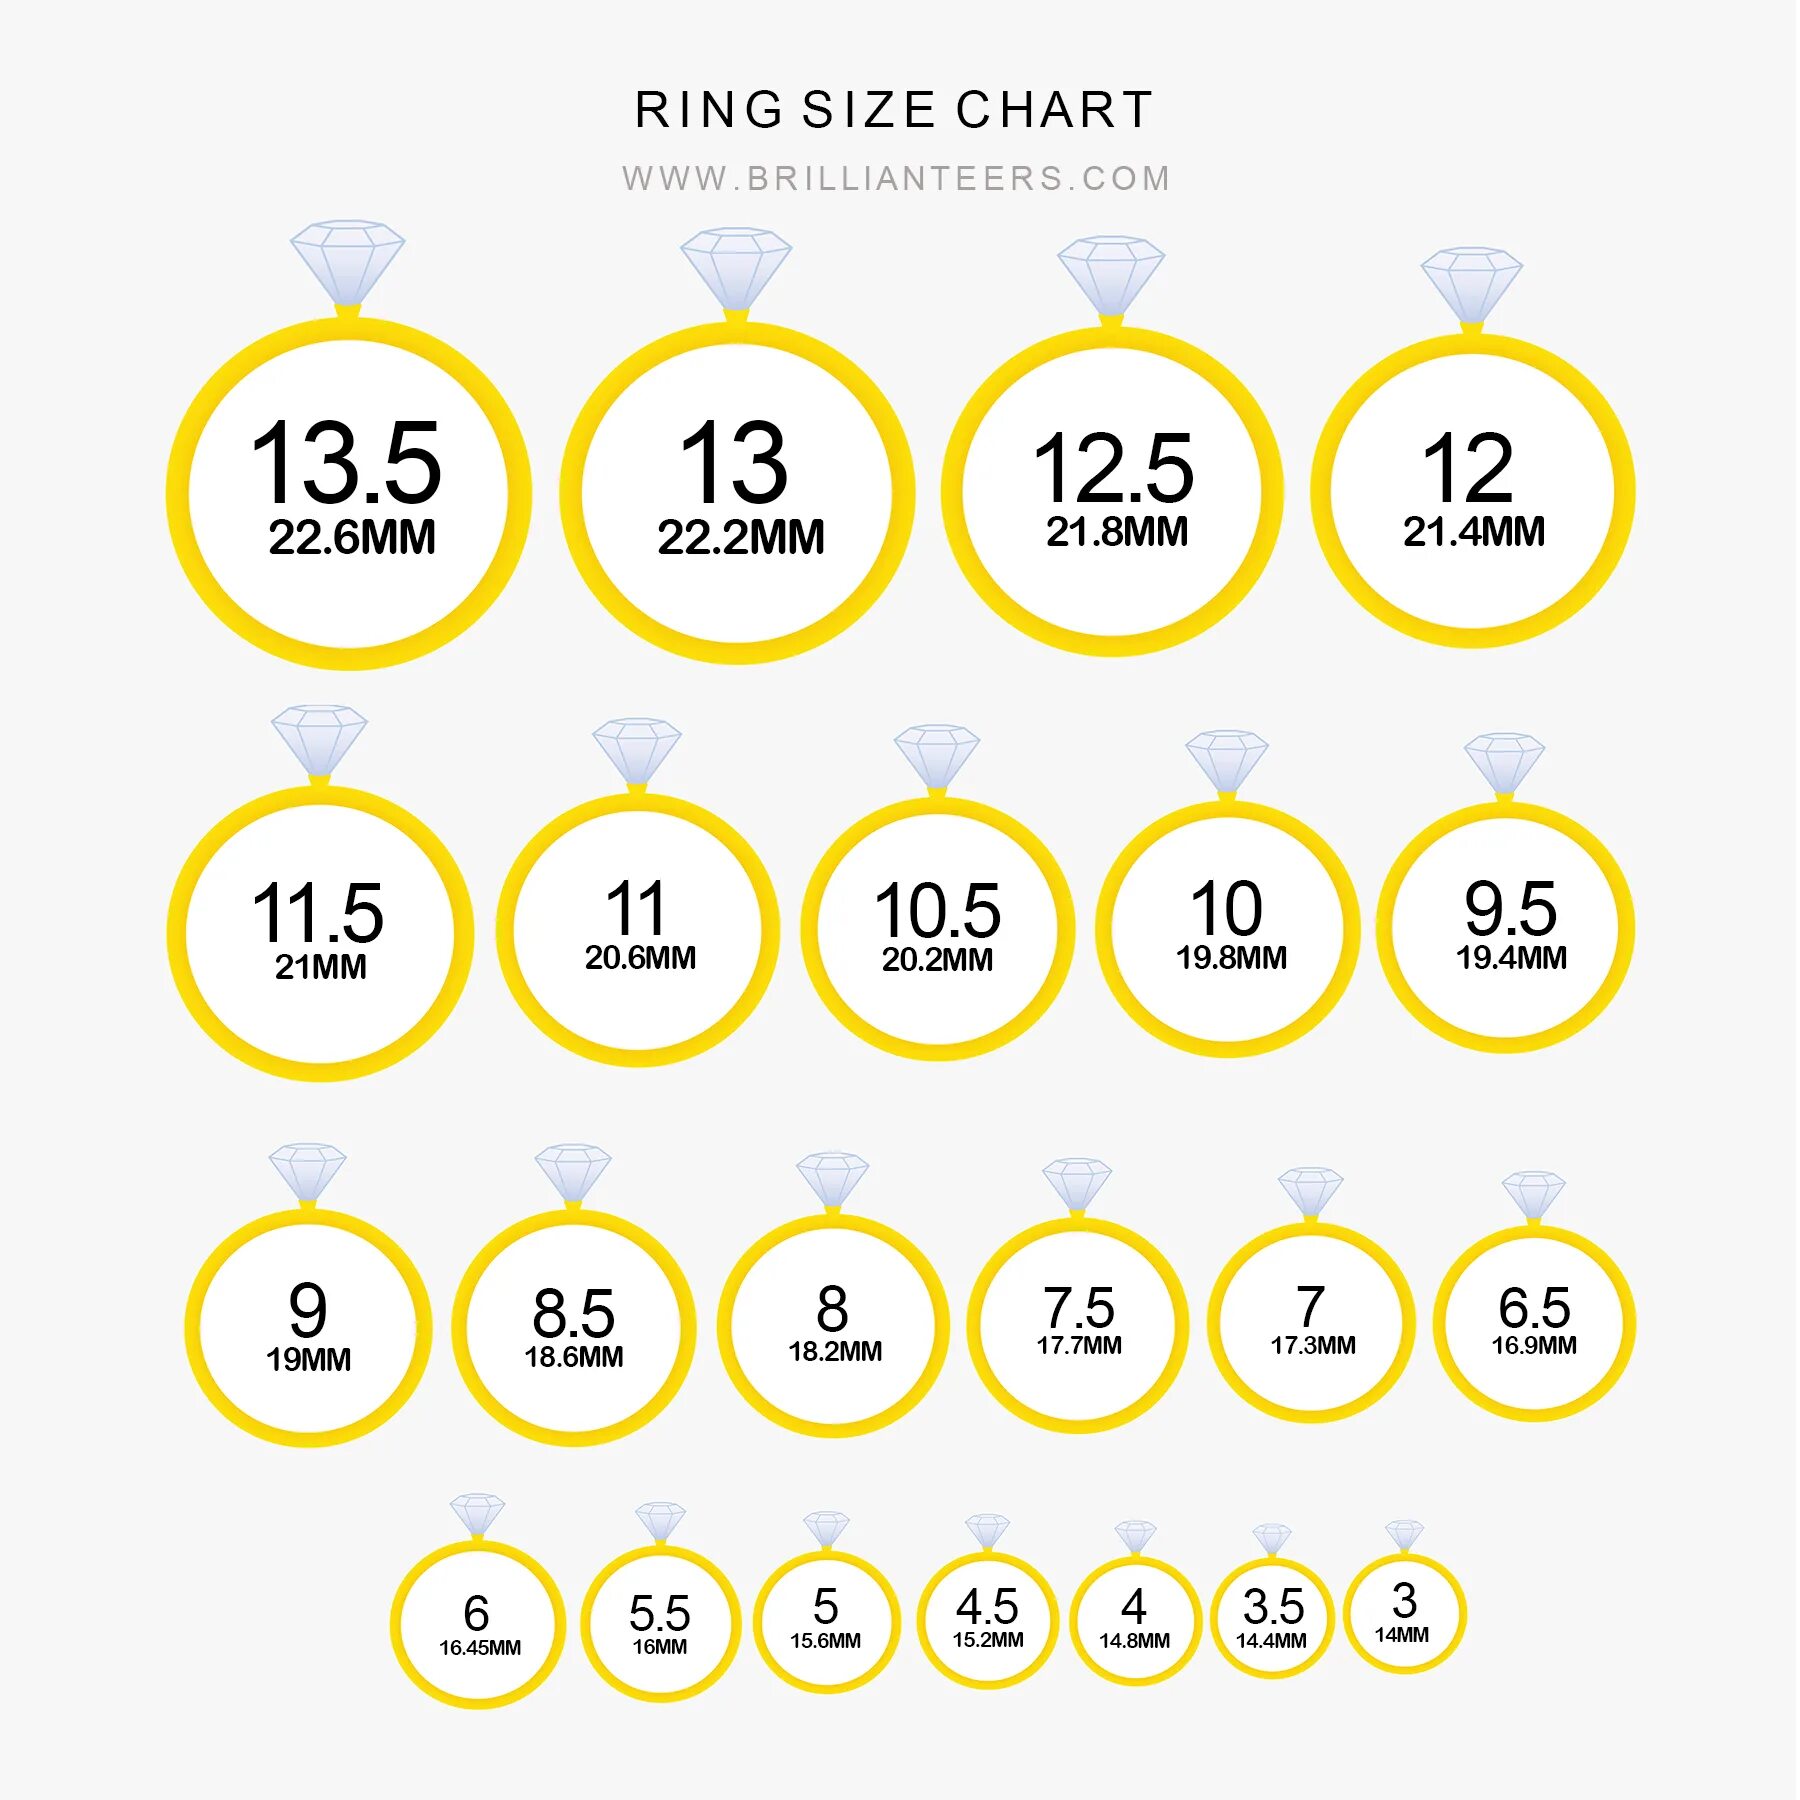 7 см какой диаметр. 6 Мм размер кольца. 6 Мм кольцо размер диаметр. Размер кольца диаметр 21.3 мм. 7 Мм в диаметре размер кольца.